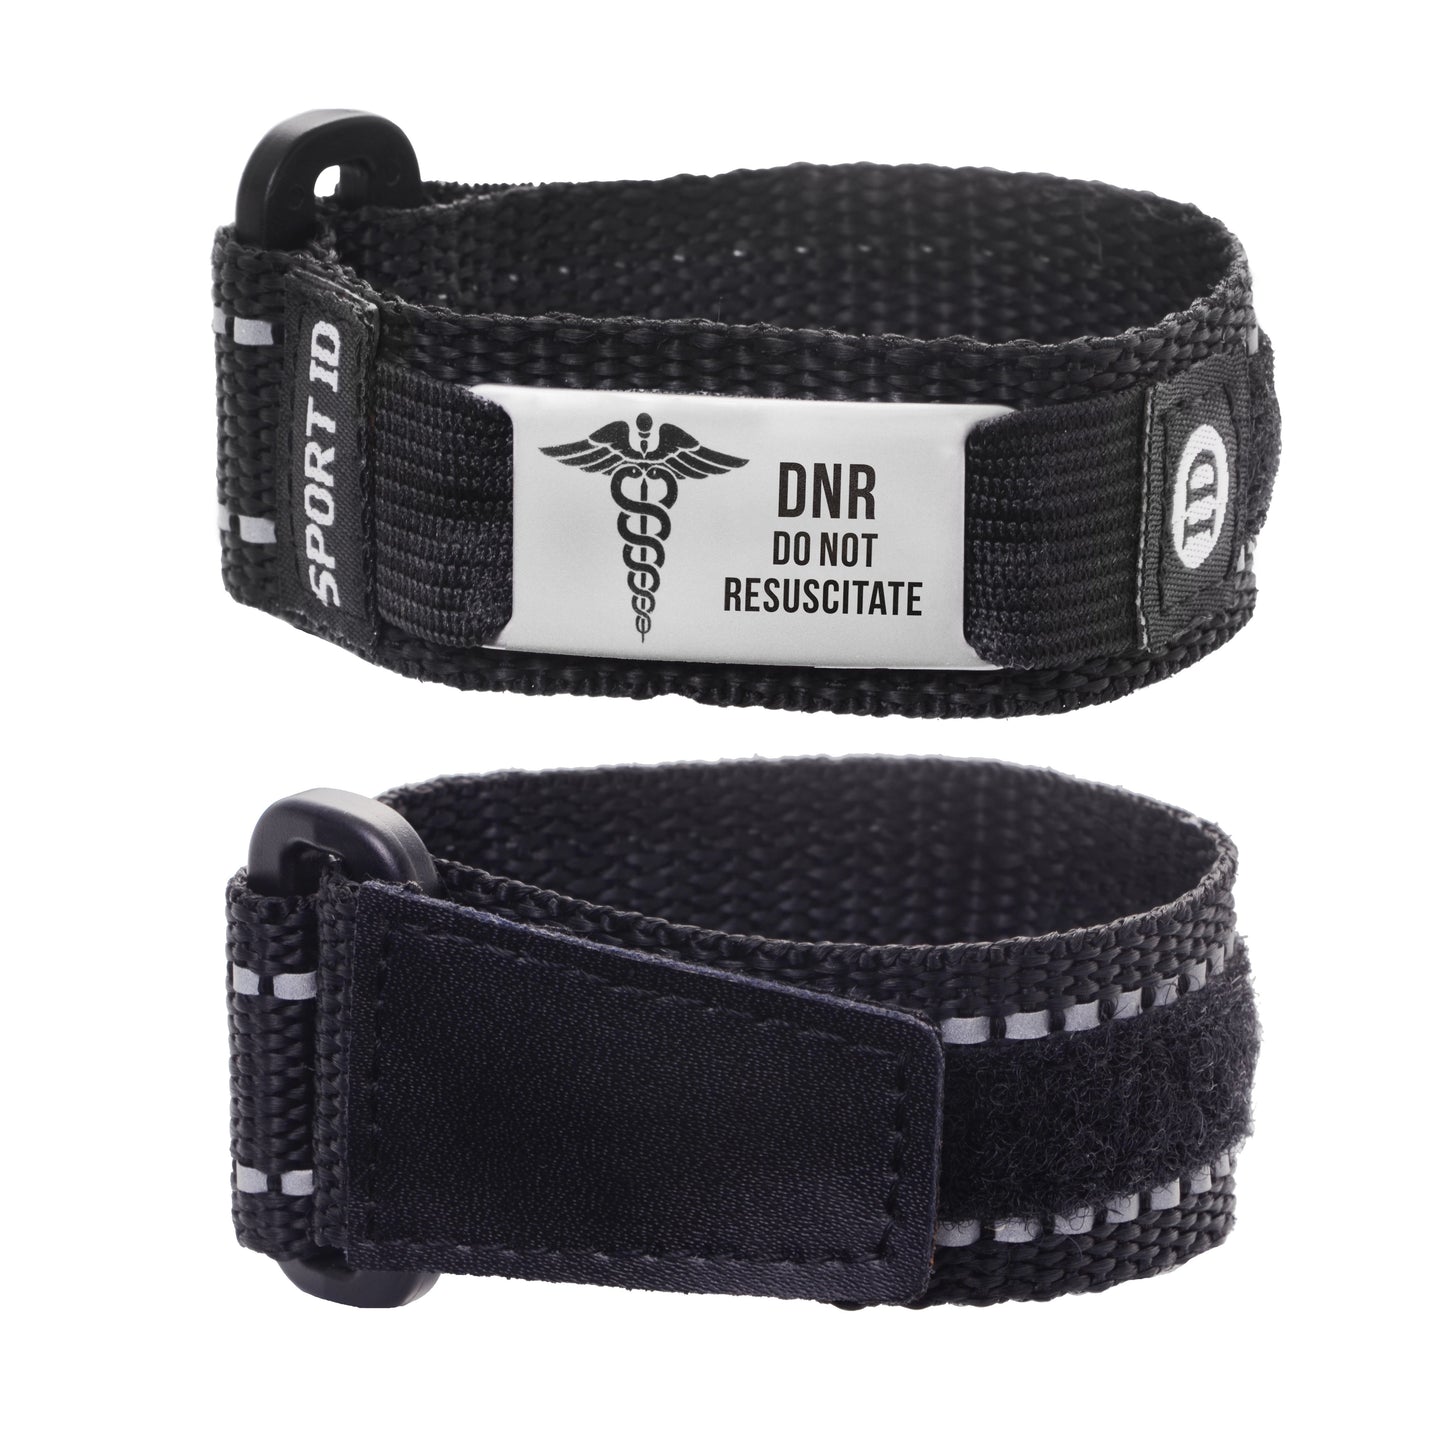 LinnaLove Sport Nylon Medical Alert Bracelets with Reflective Strip Adjustable Lengths 6.5-7.5 inches-for DNR Do Not Resuscitate